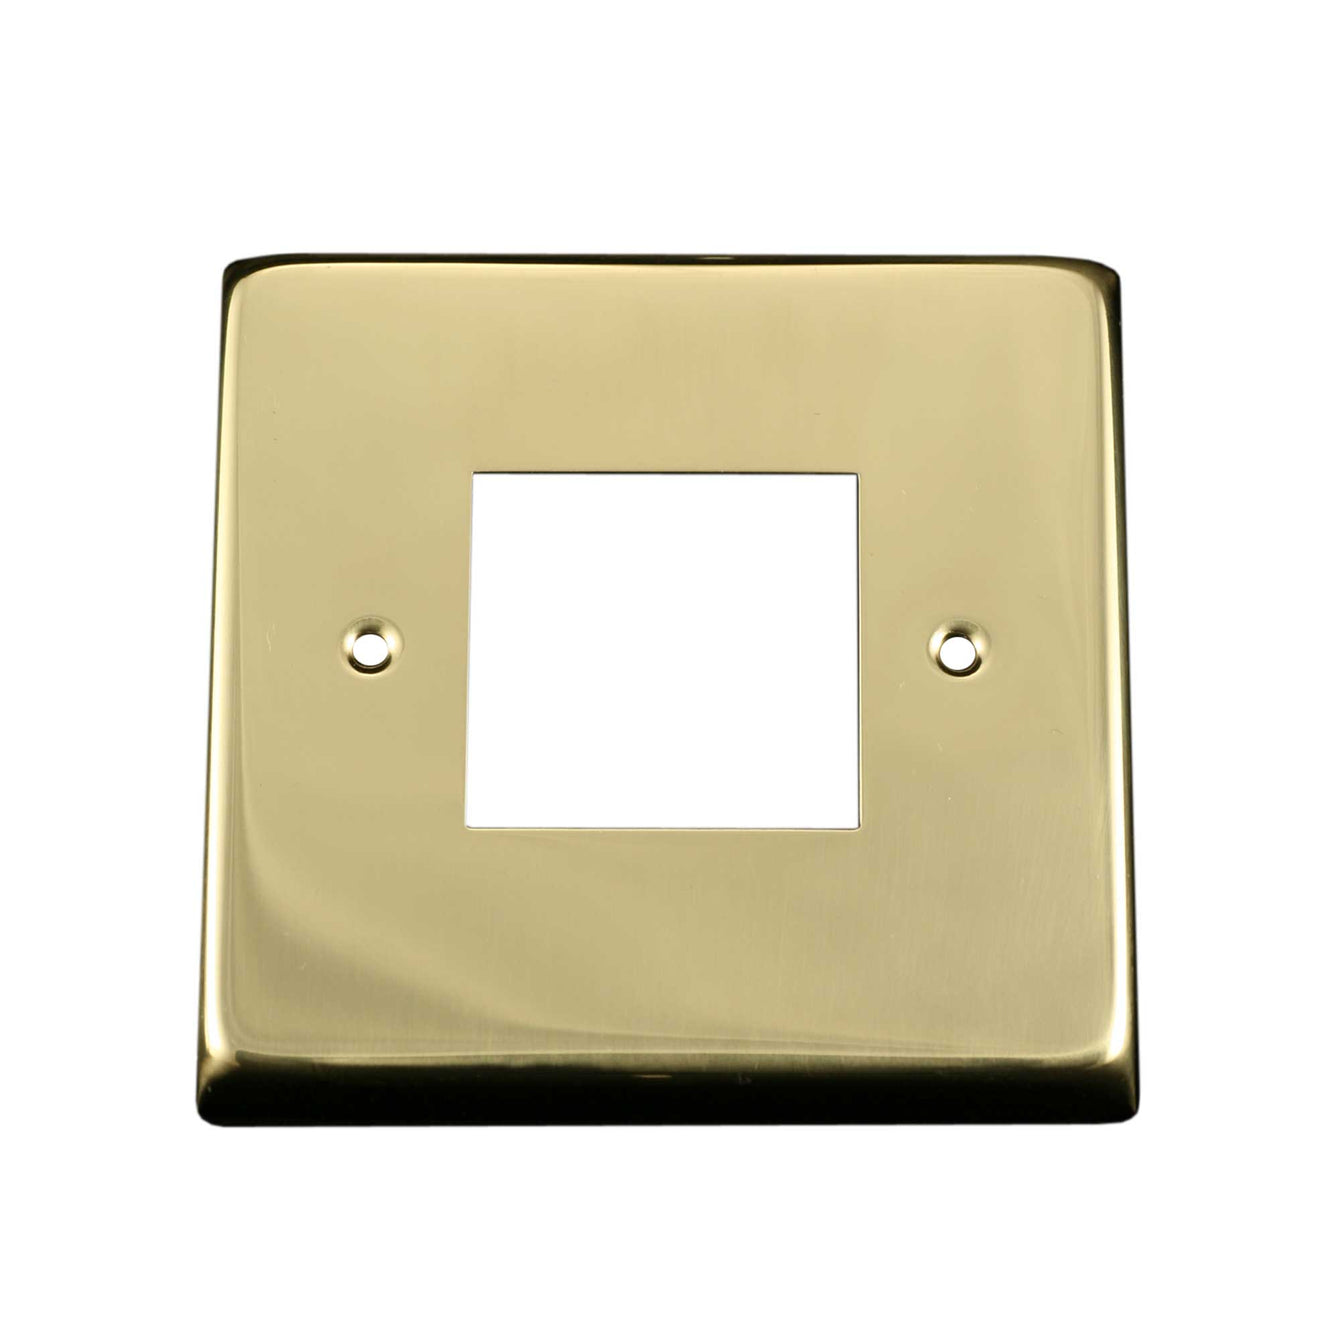 ElekTek Light Switch Conversion Metal Modern Cover Plate No Wiring Double Antique Brass